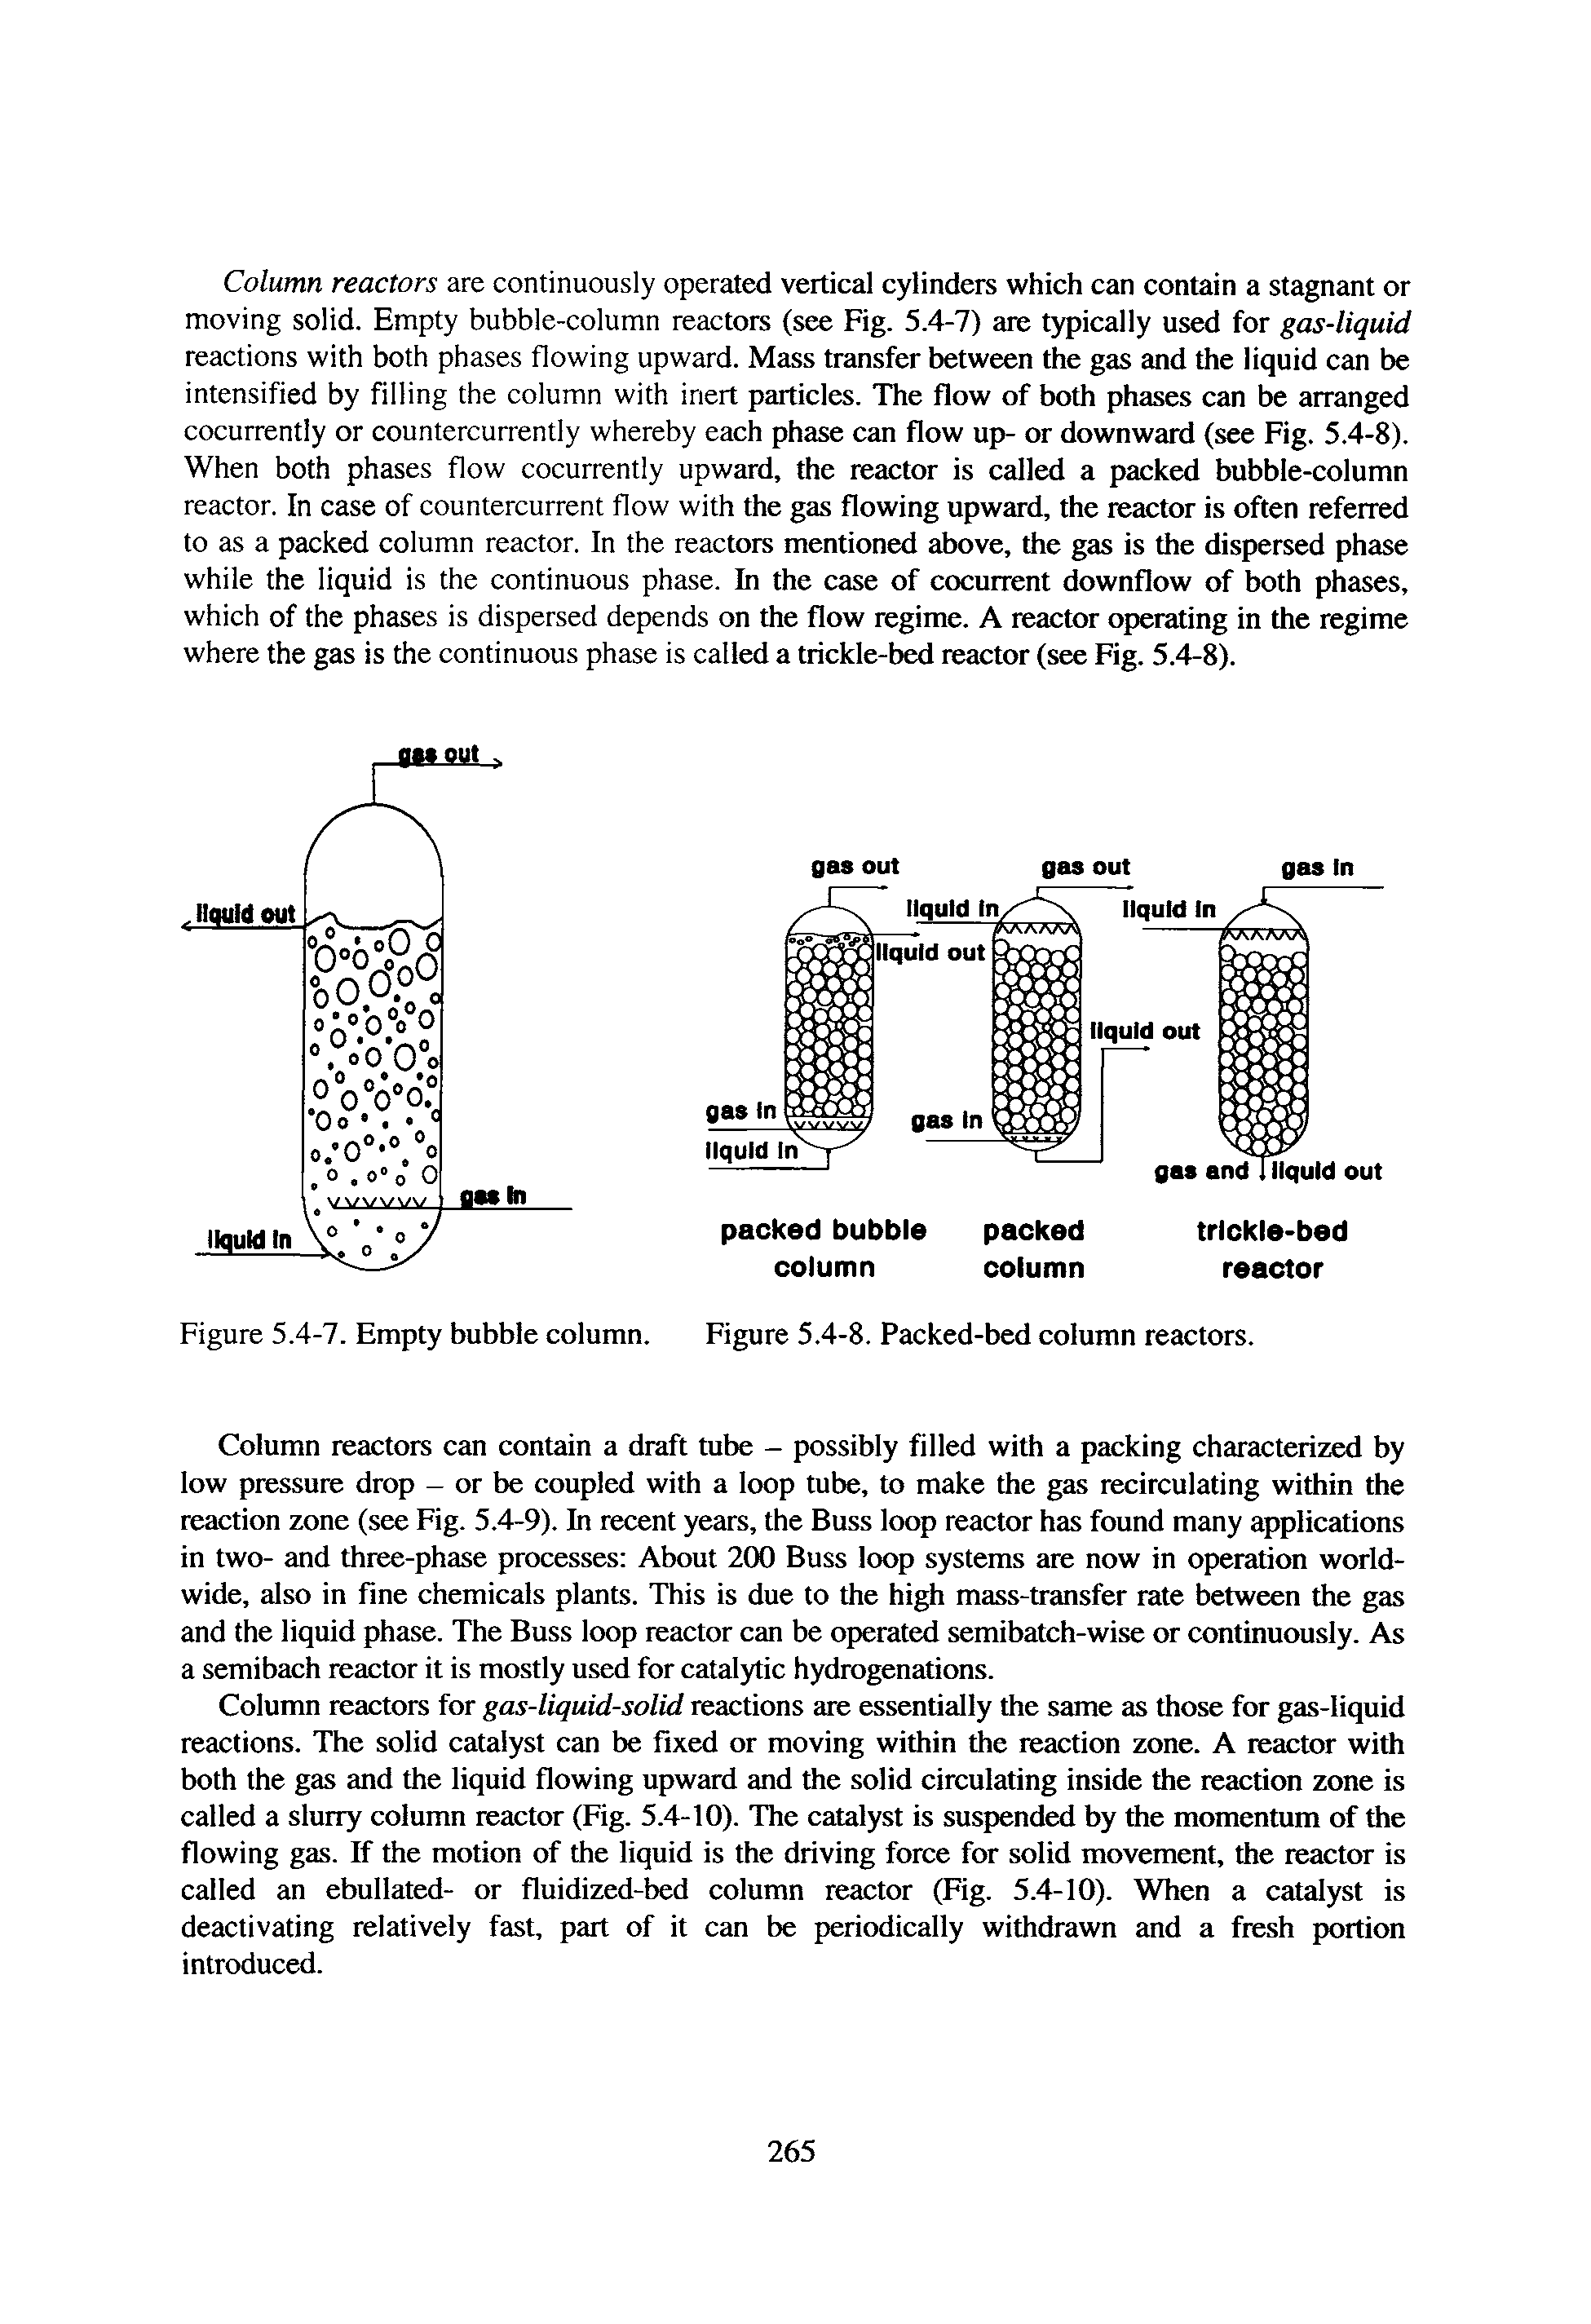 Figure 5.4-7. Empty bubble column. Figure 5.4-8. Packed-bed column reactors.